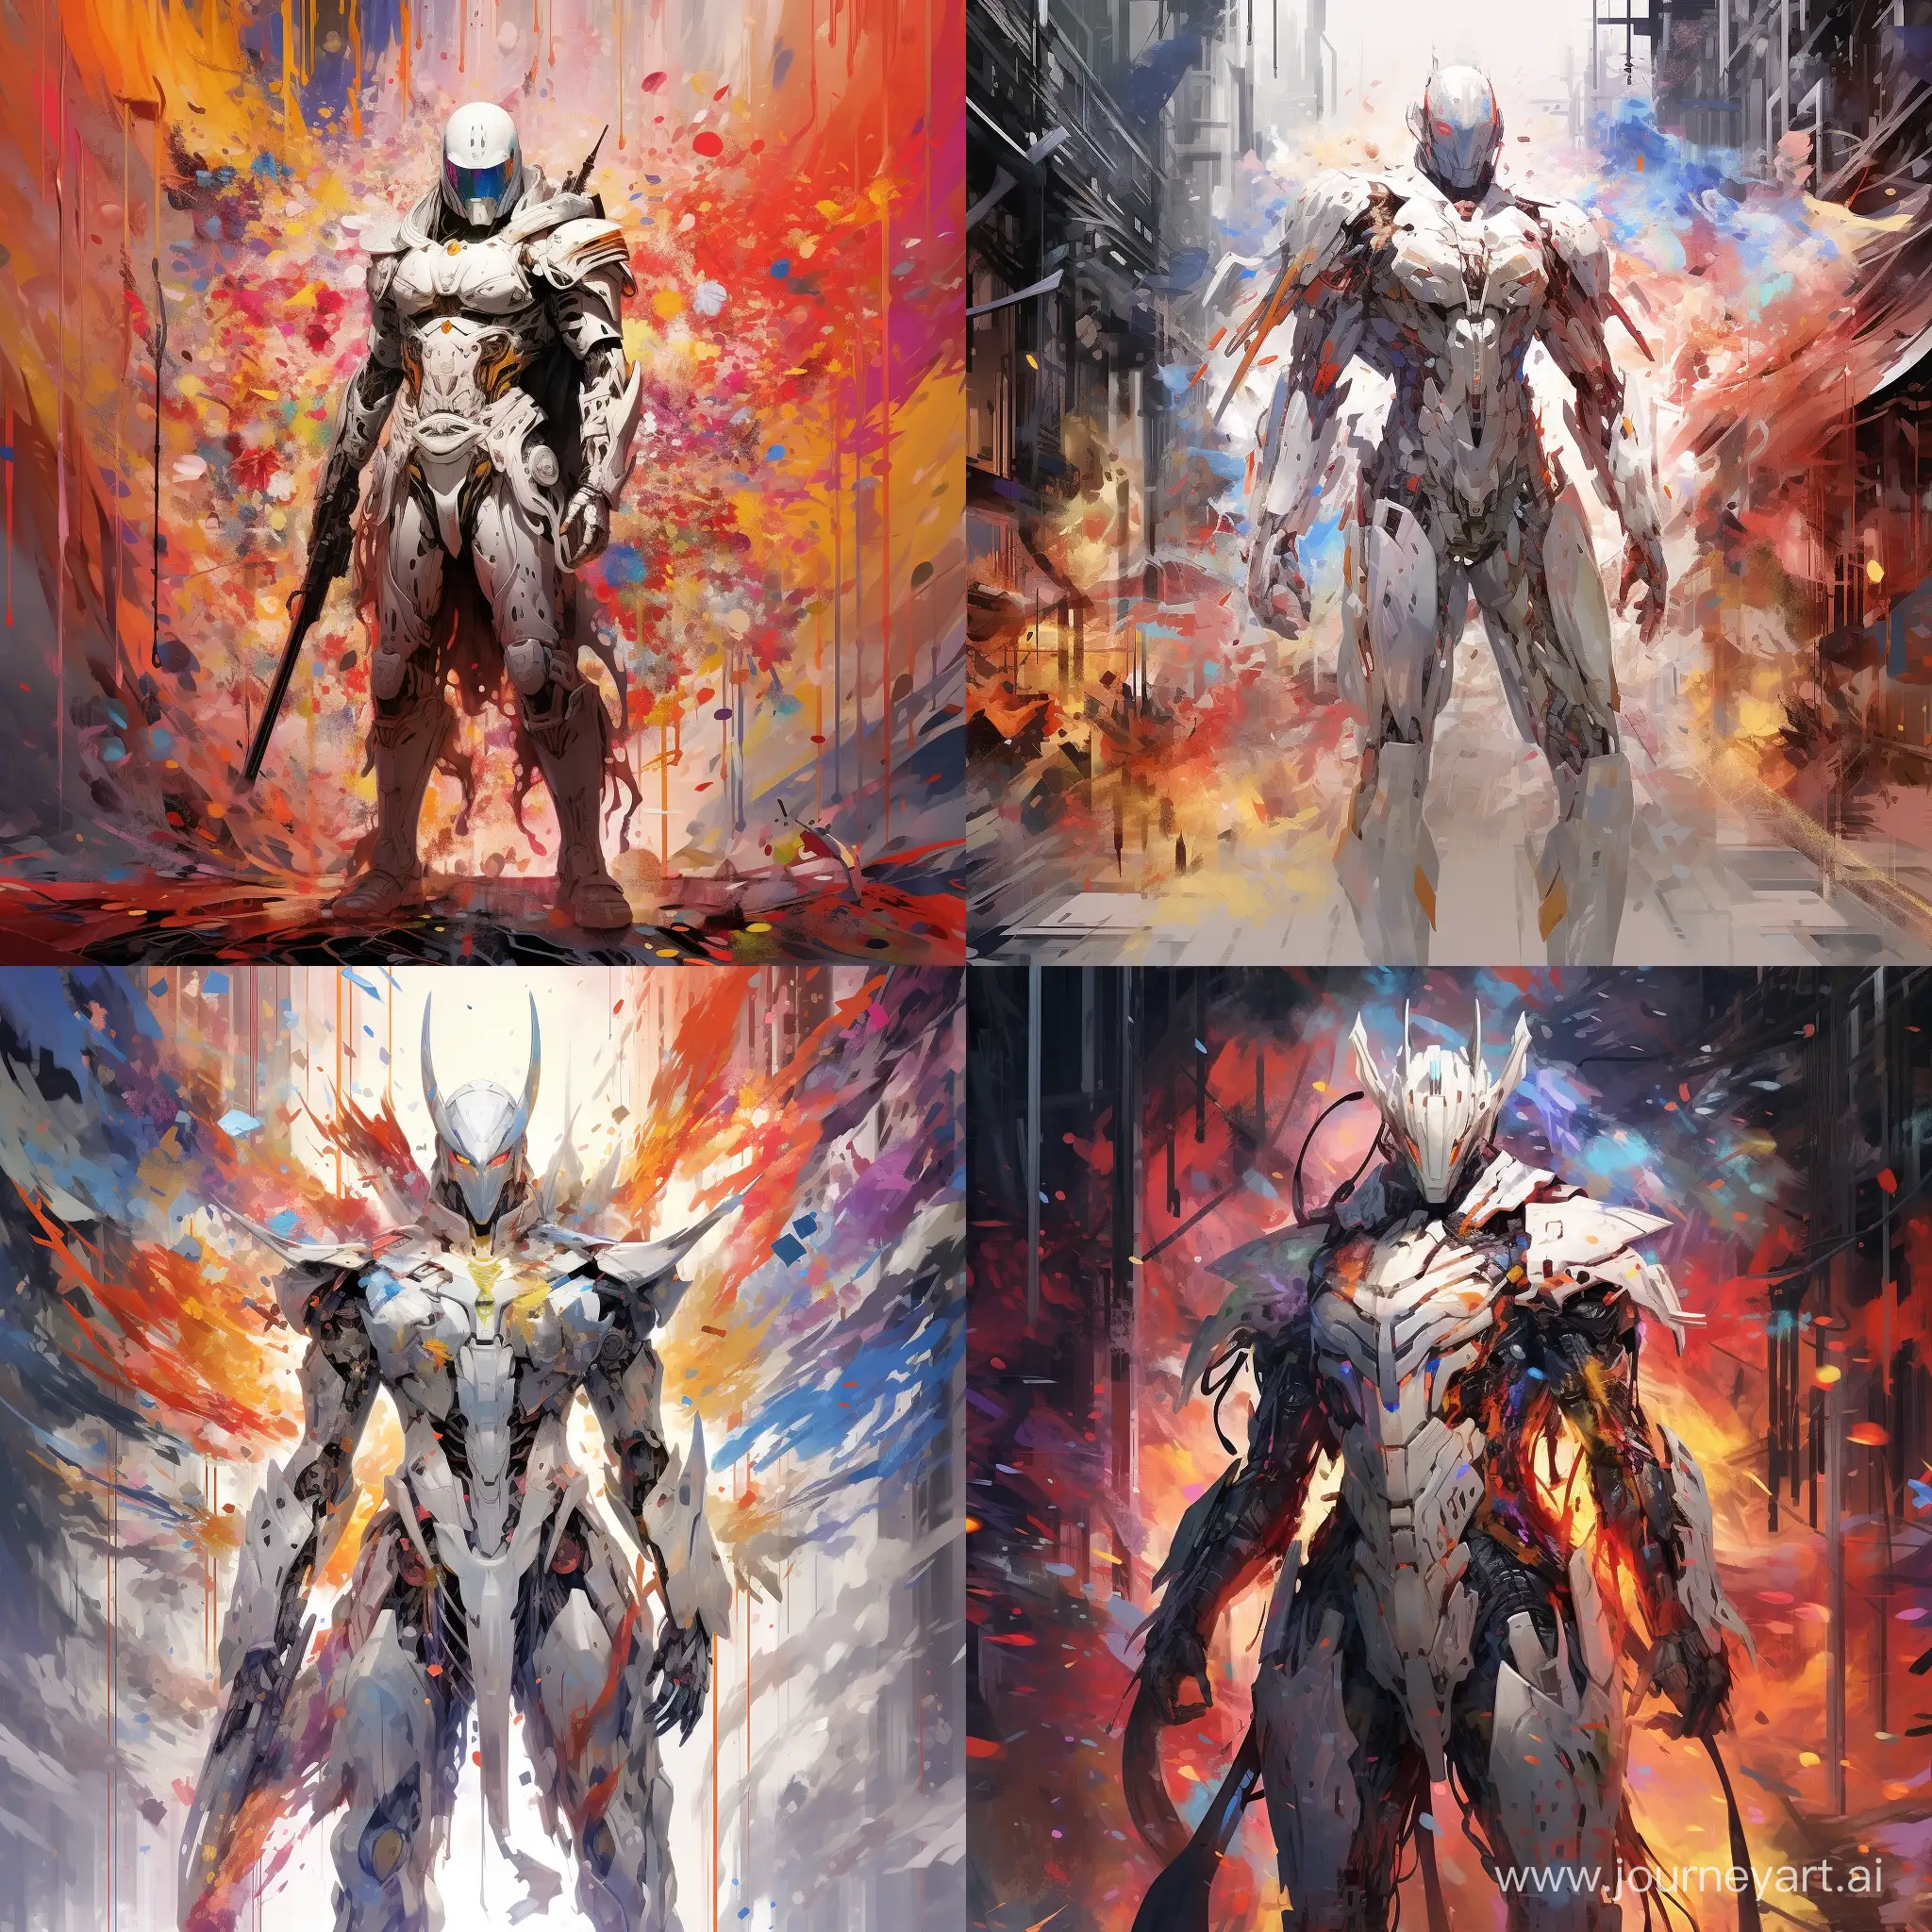 Futuristic-White-Knight-in-Cyberpunk-Explosion-of-Colors